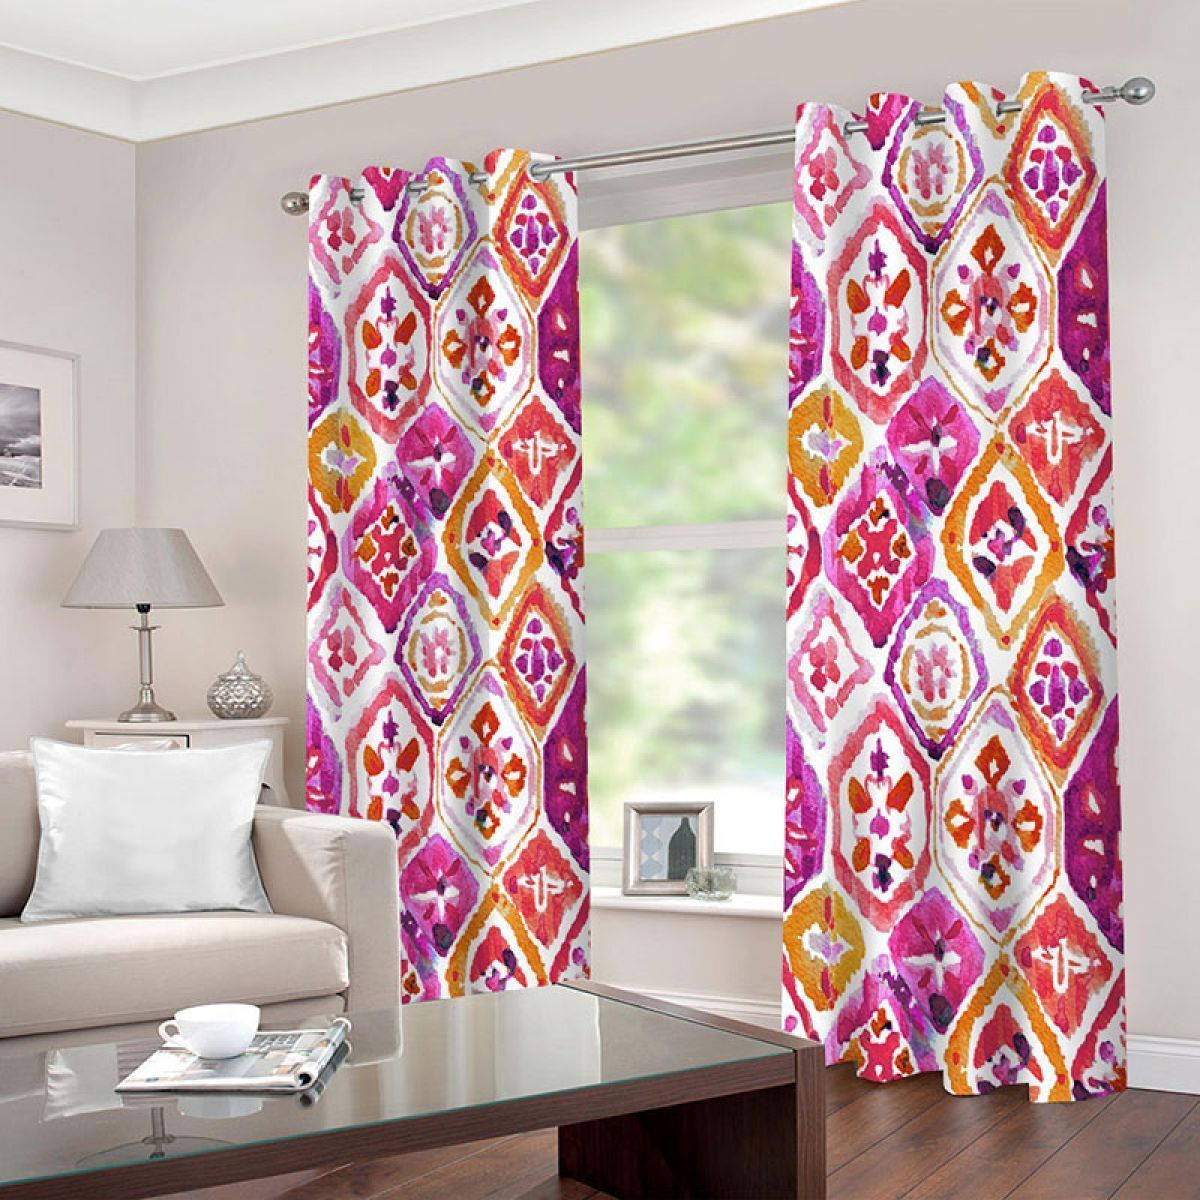 3d print geometric white background printed window curtain home decor 5970